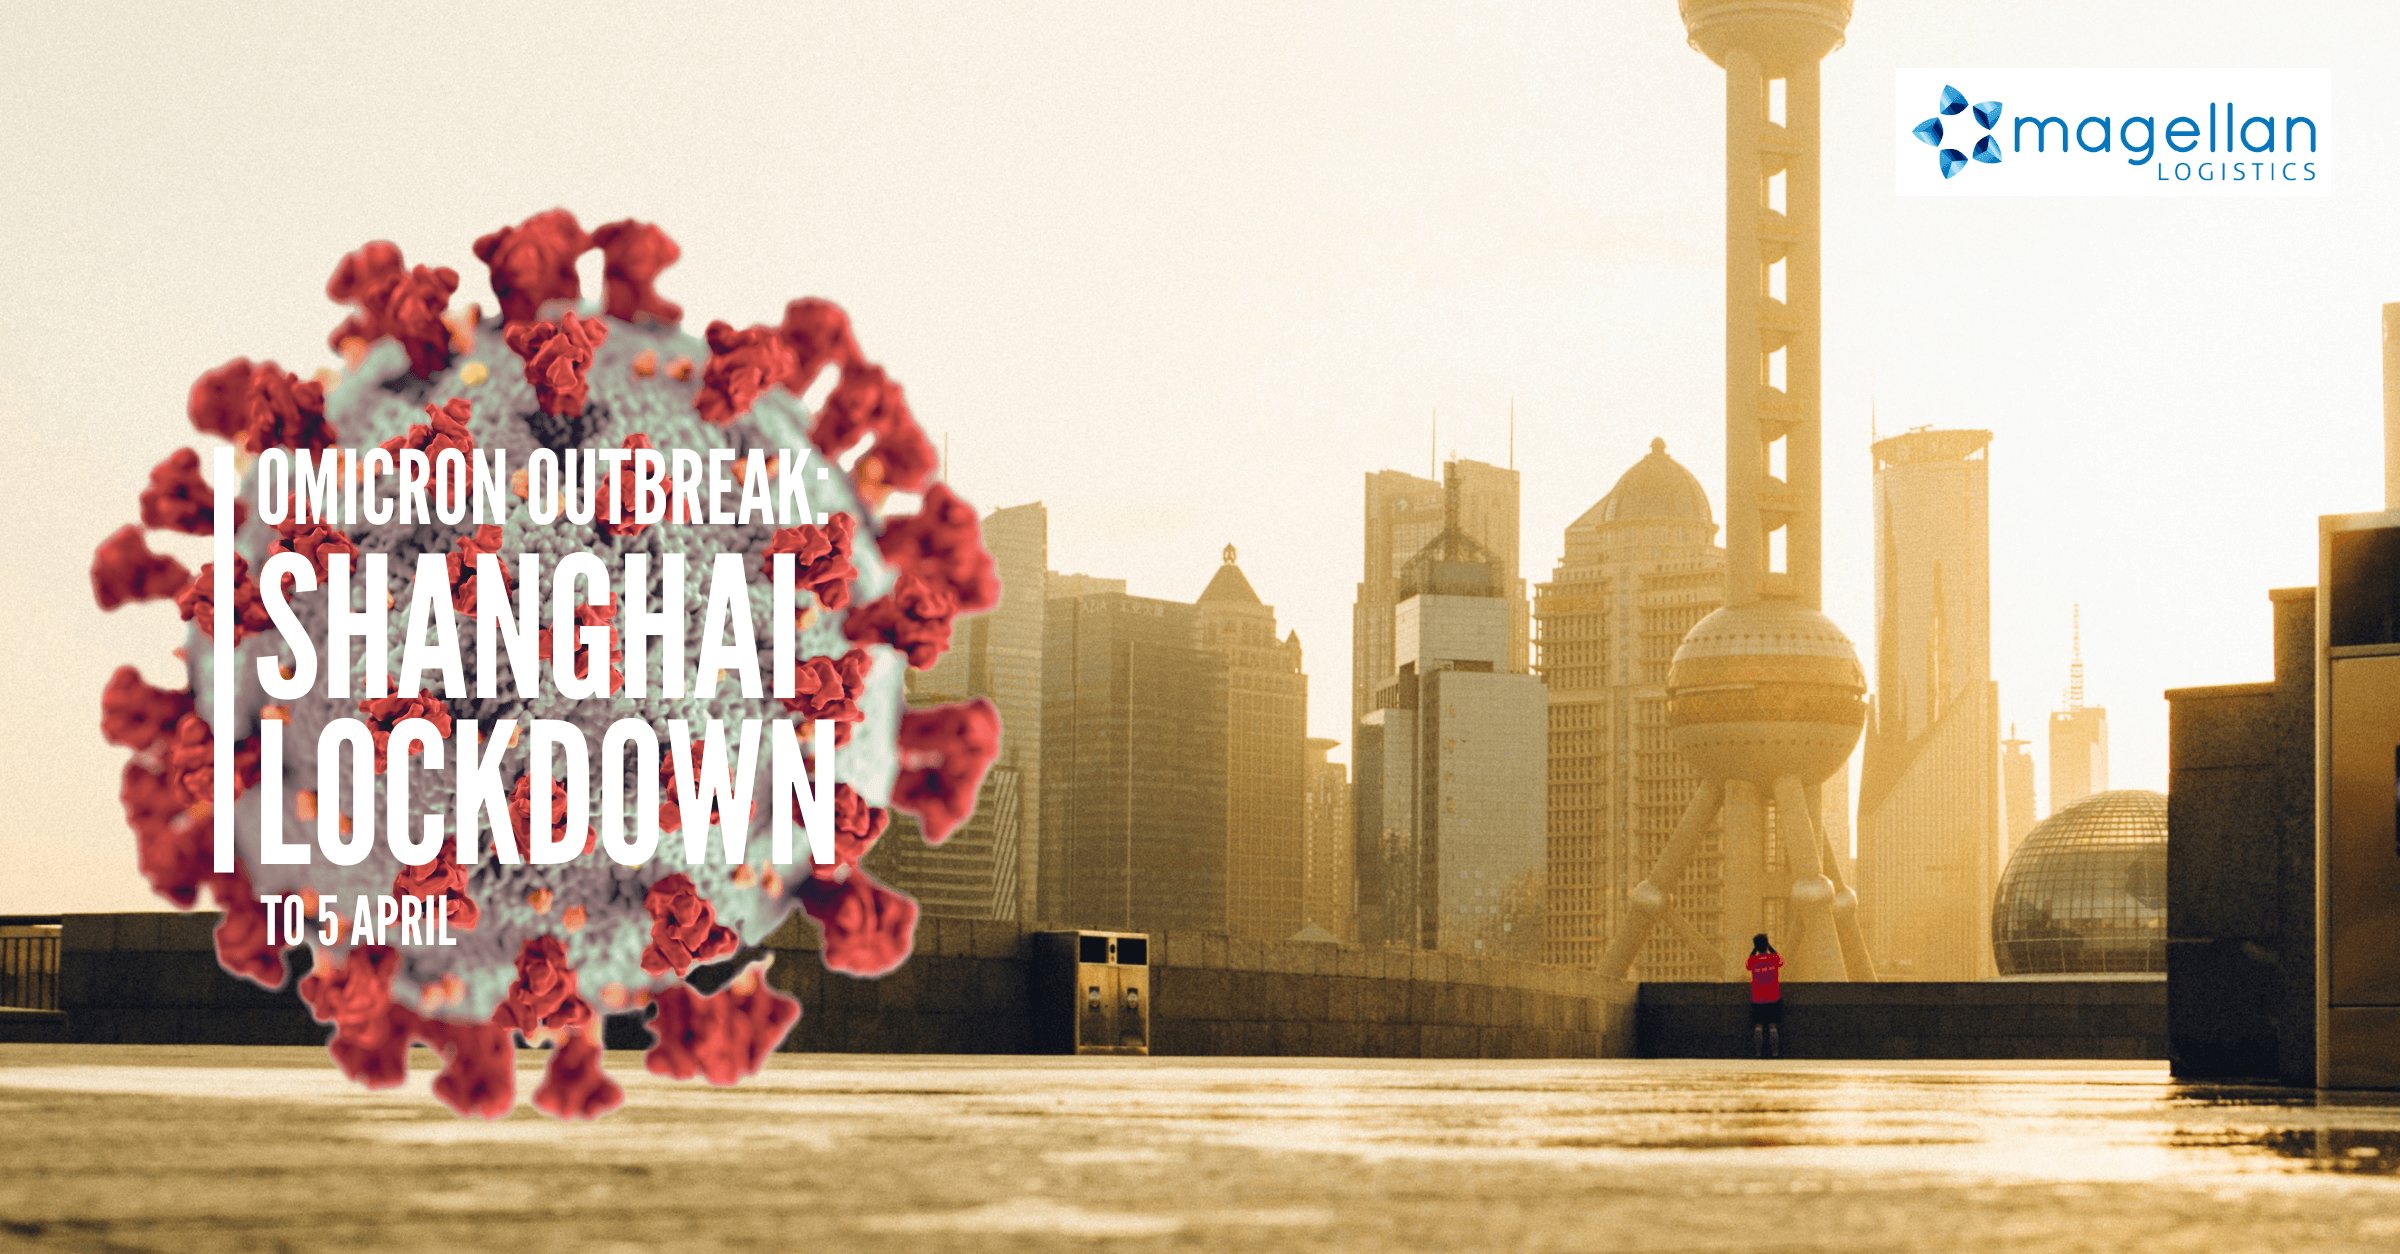 Shanghai lockdown until 5 April.